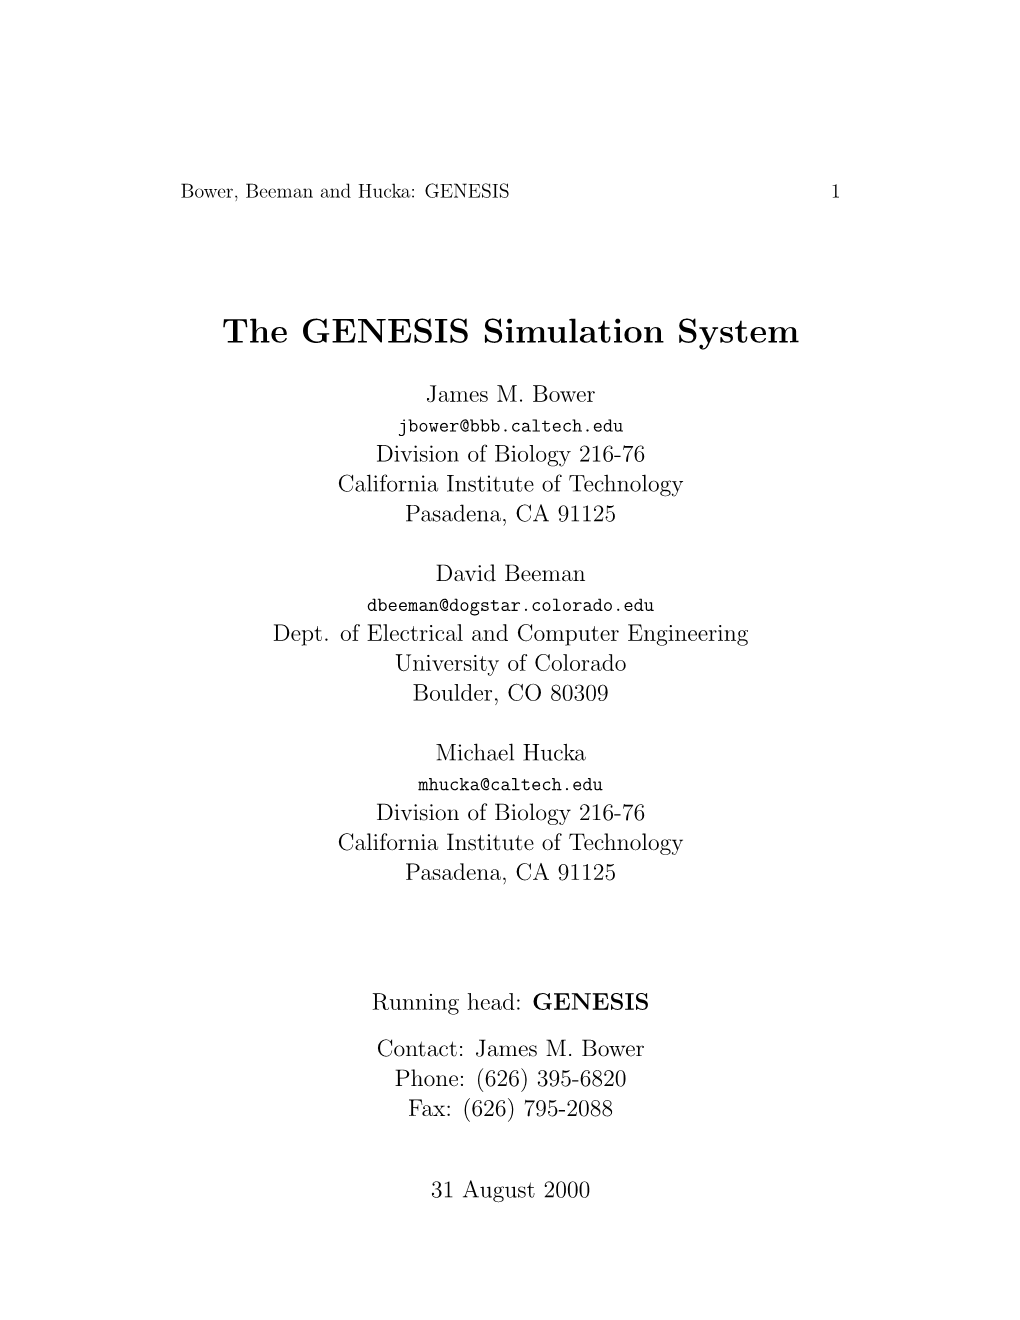 The GENESIS Simulation System